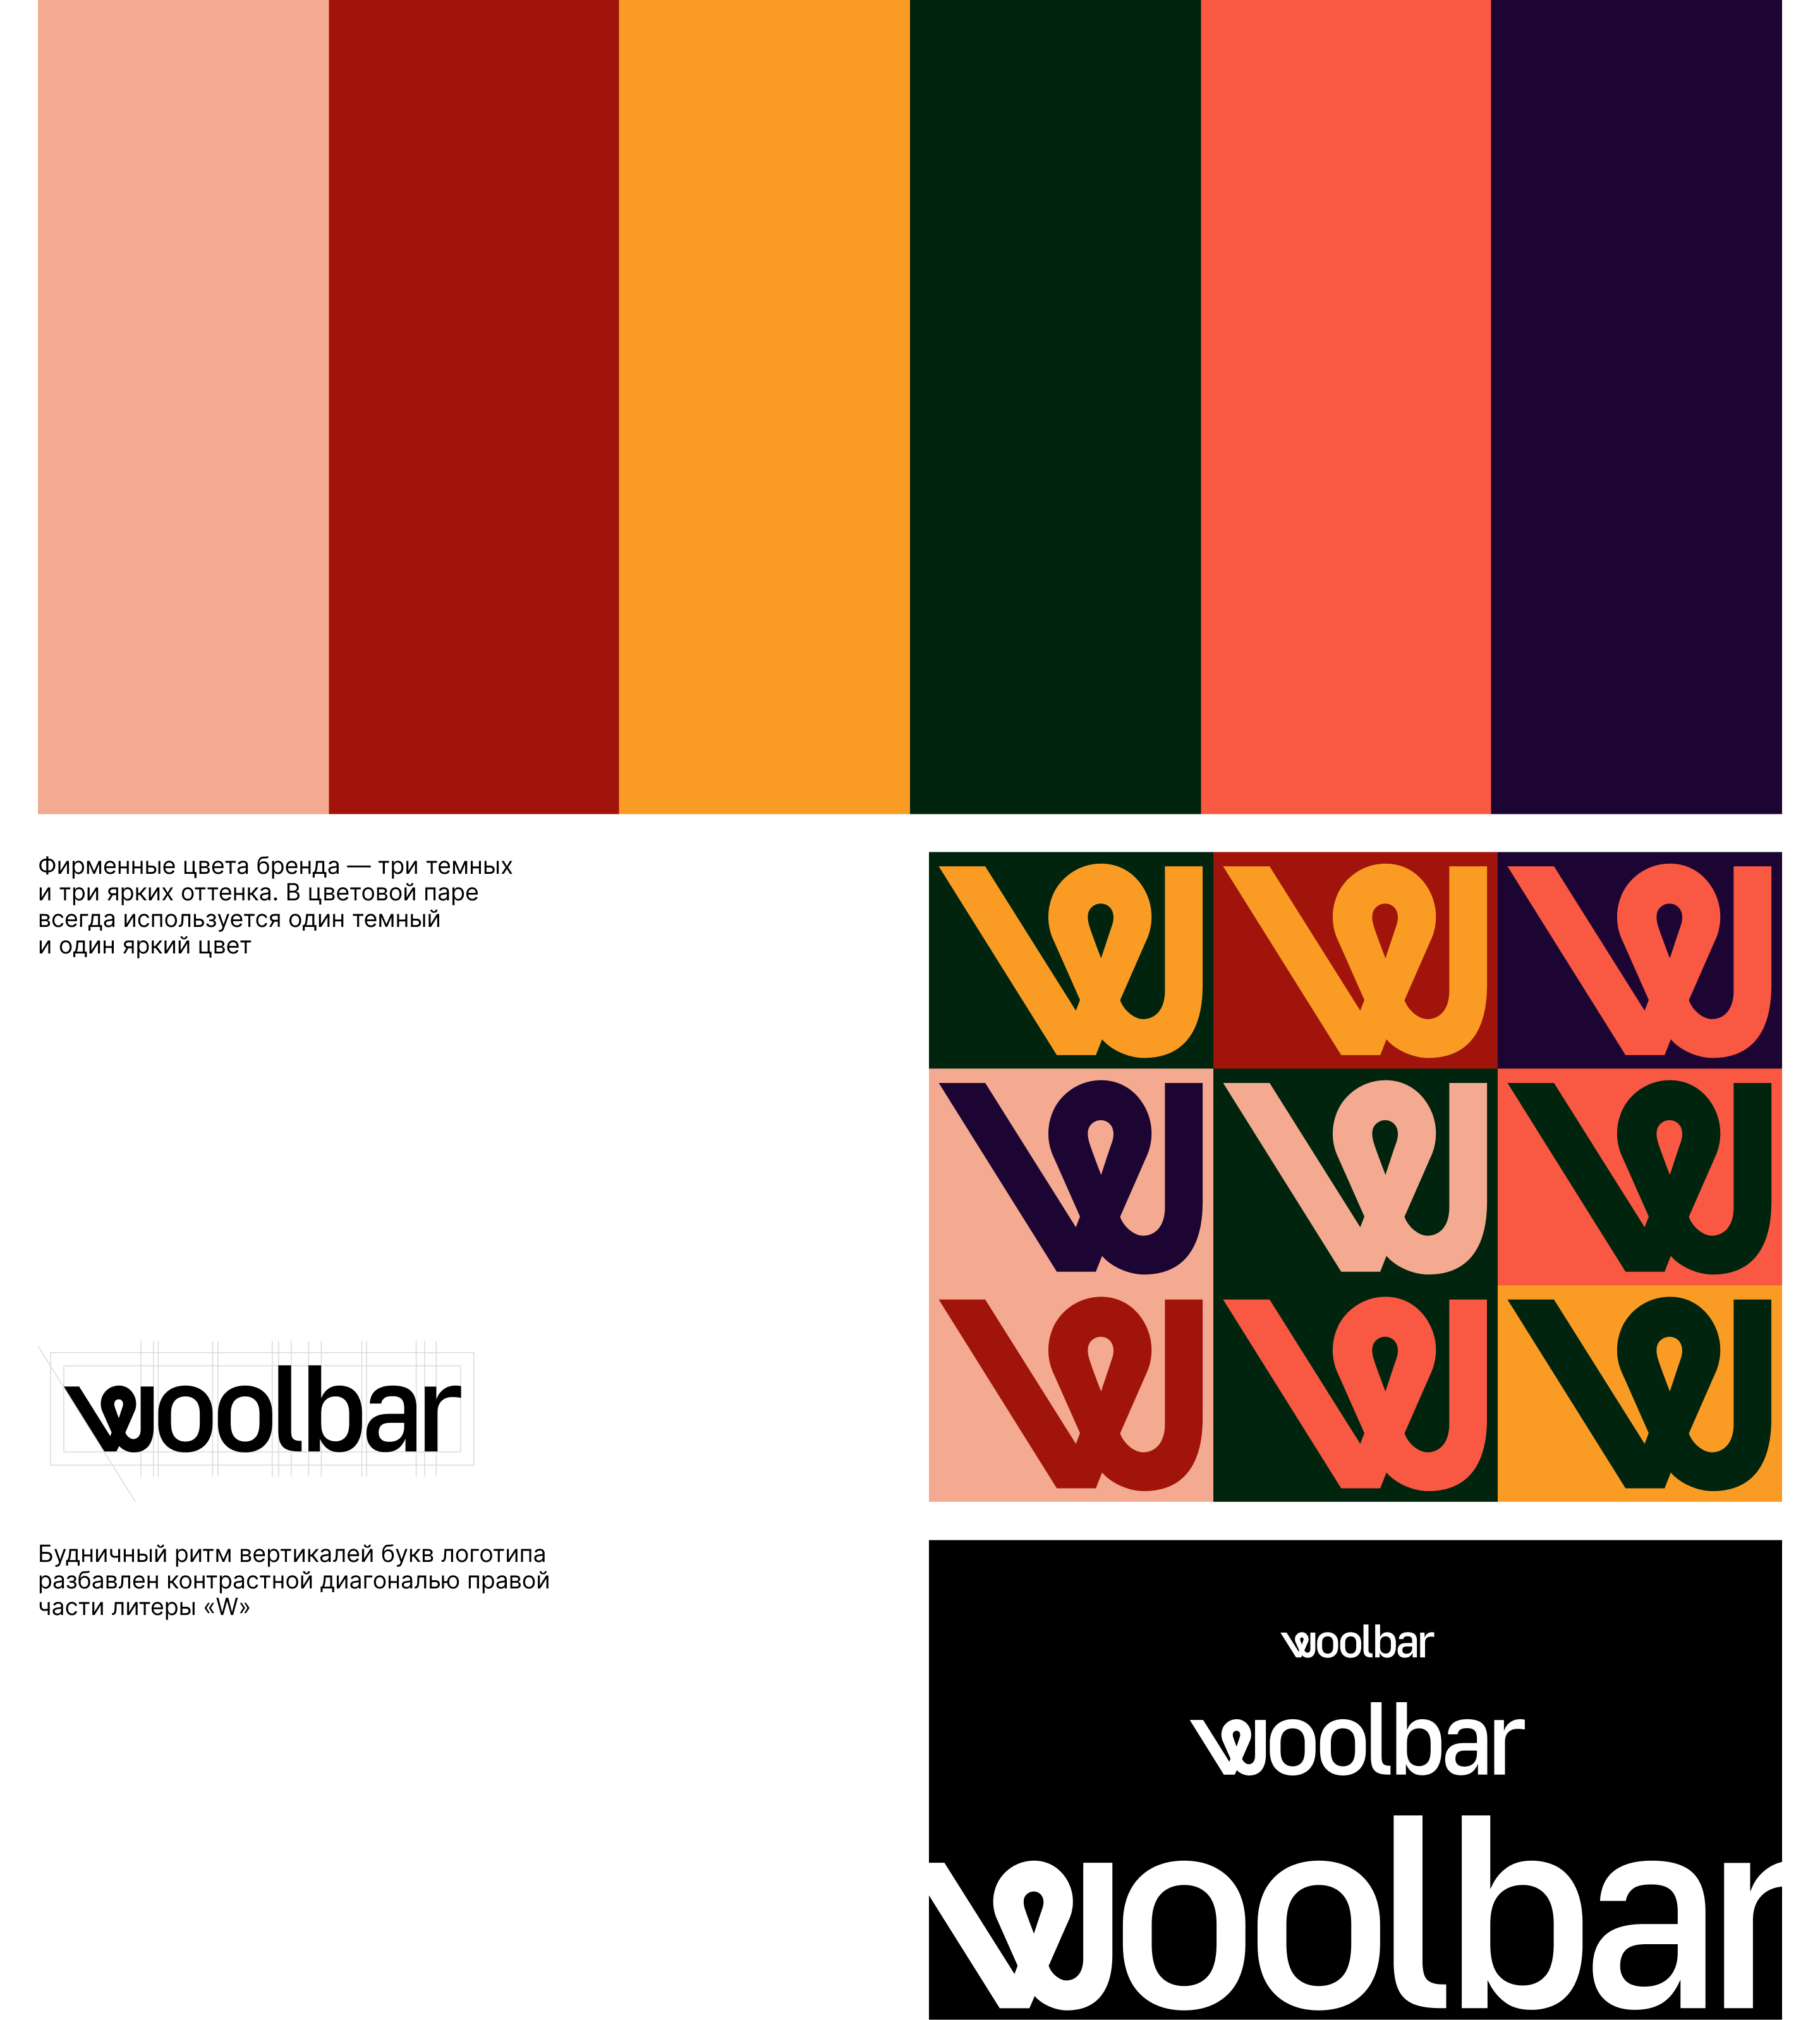 Woolbar — Изображение №3 — Брендинг, Графика на Dprofile